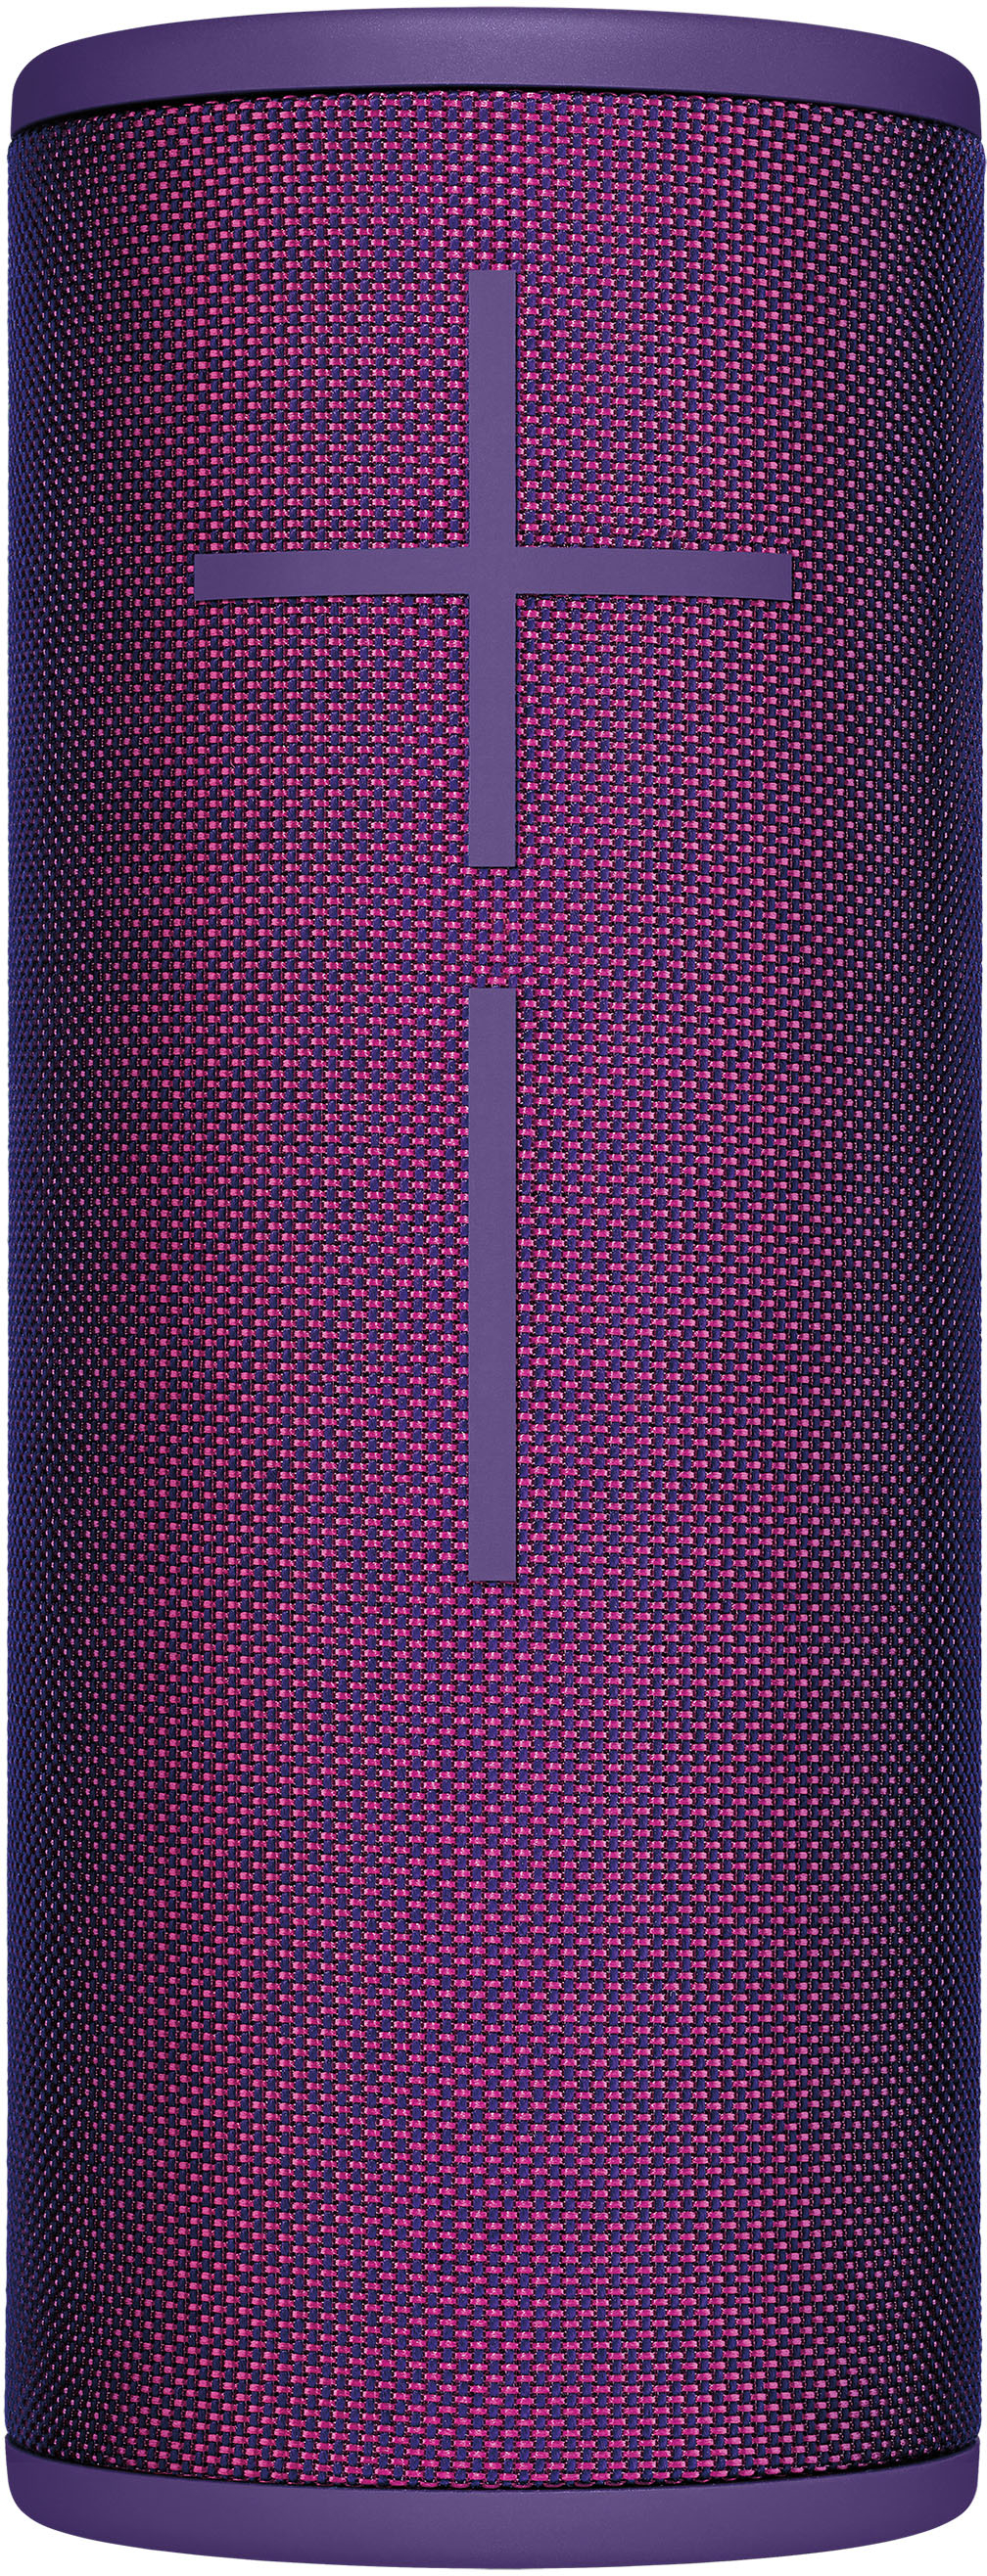 Ultimate Ears BOOM 3 Portable Wireless Bluetooth Speaker with  Waterproof/Dustproof Design Ultraviolet Purple 984-001351 - Best Buy